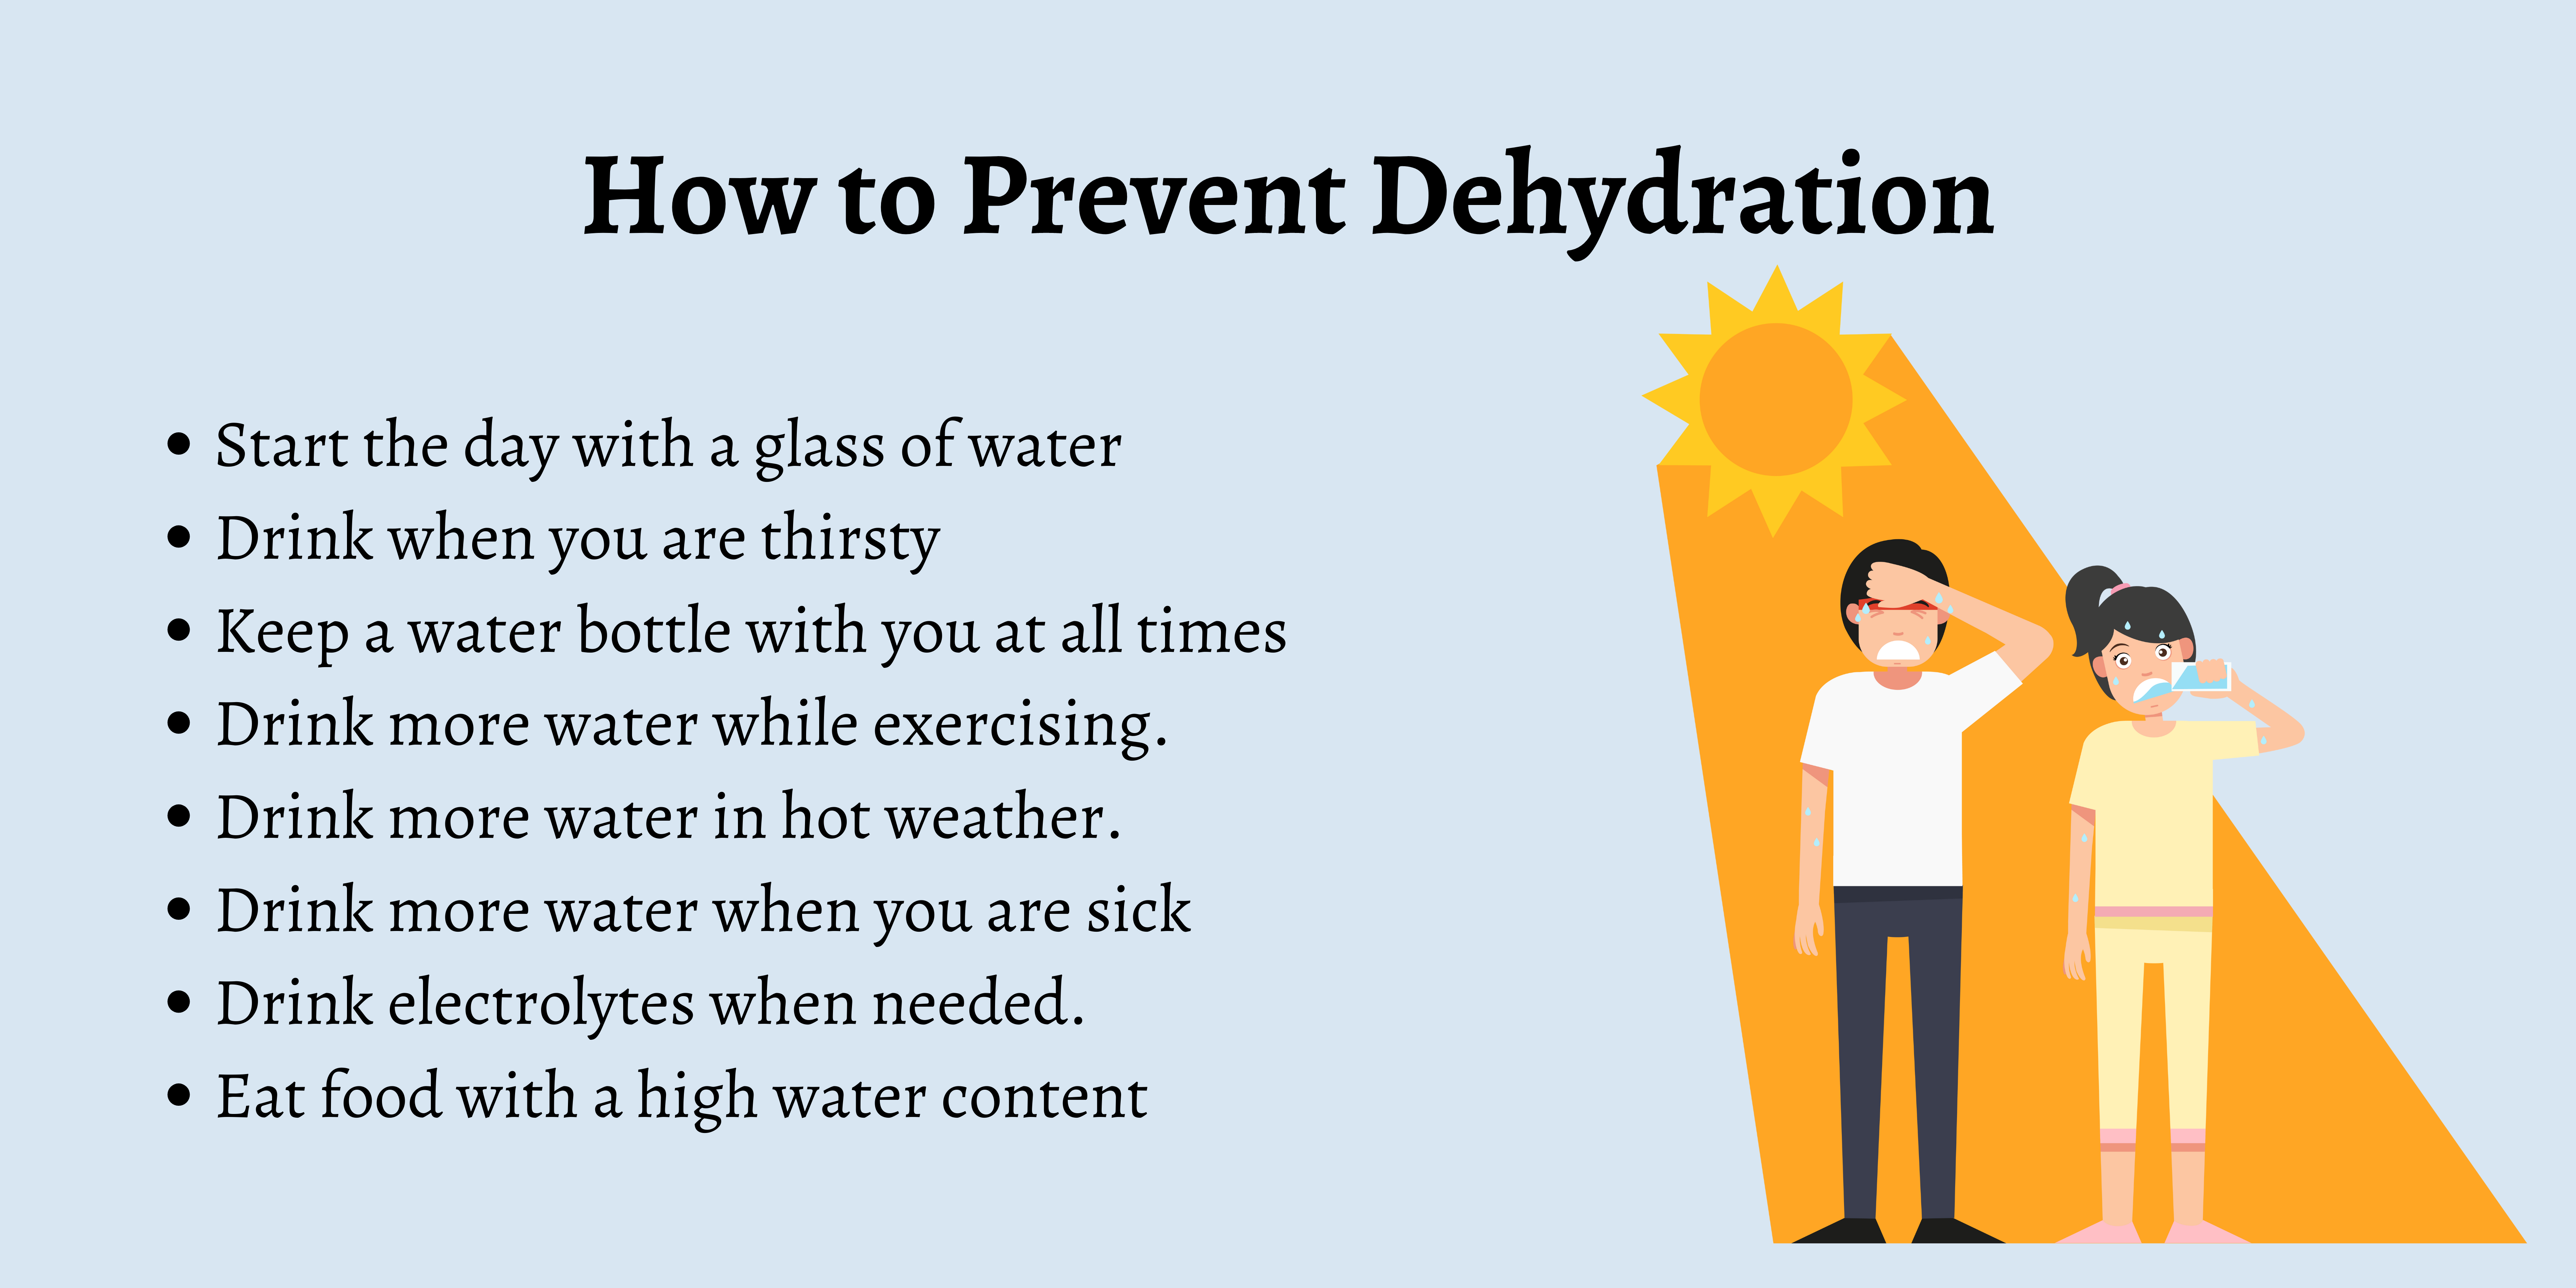 Dehydration prevention